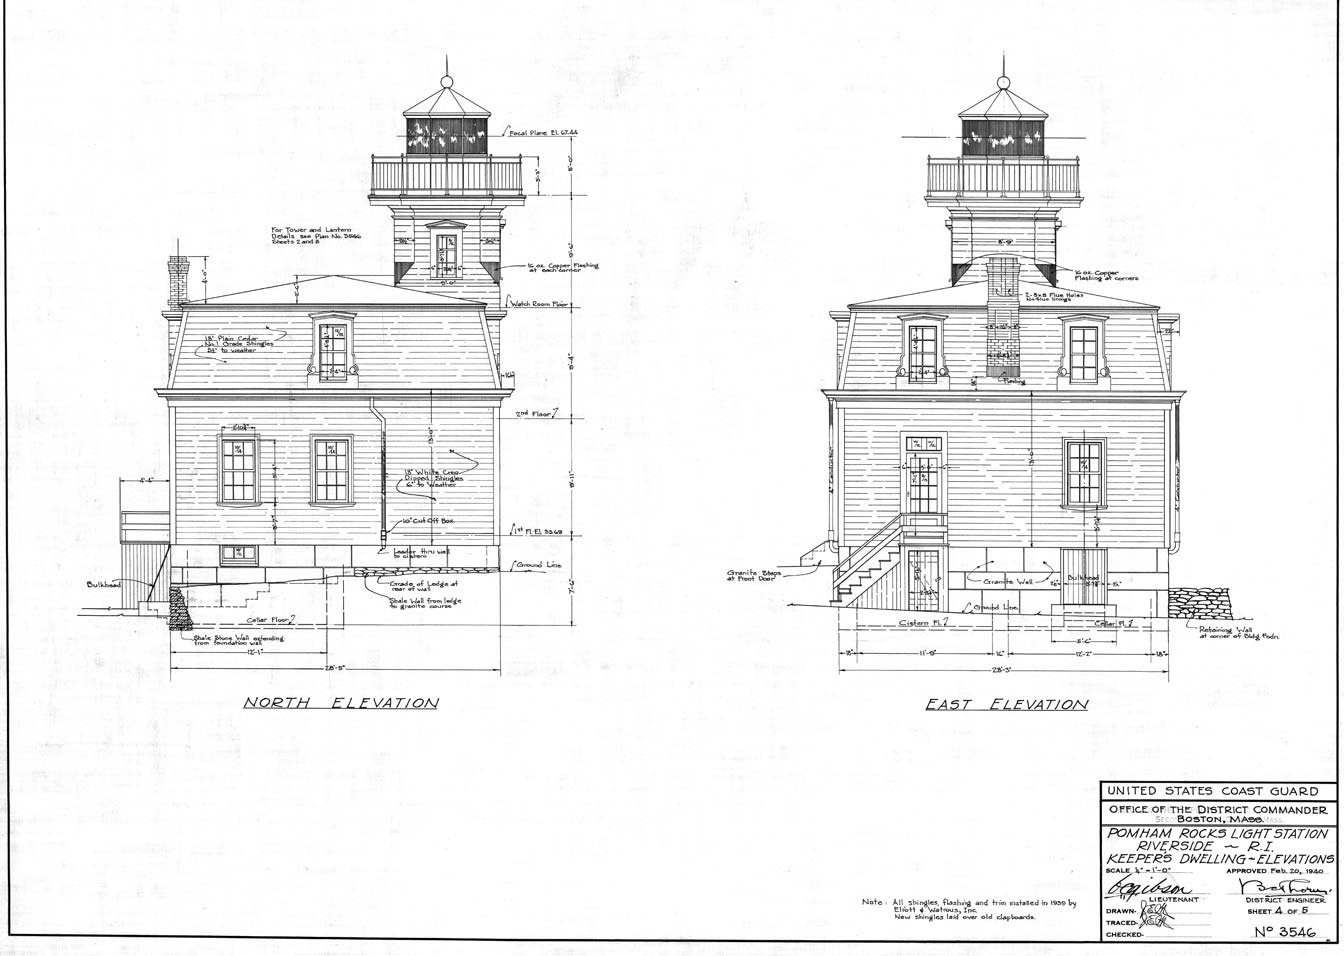   Pomham Rocks Light Station Keepers Dwelling Elevations - Sheet 4 of 5 - 1940